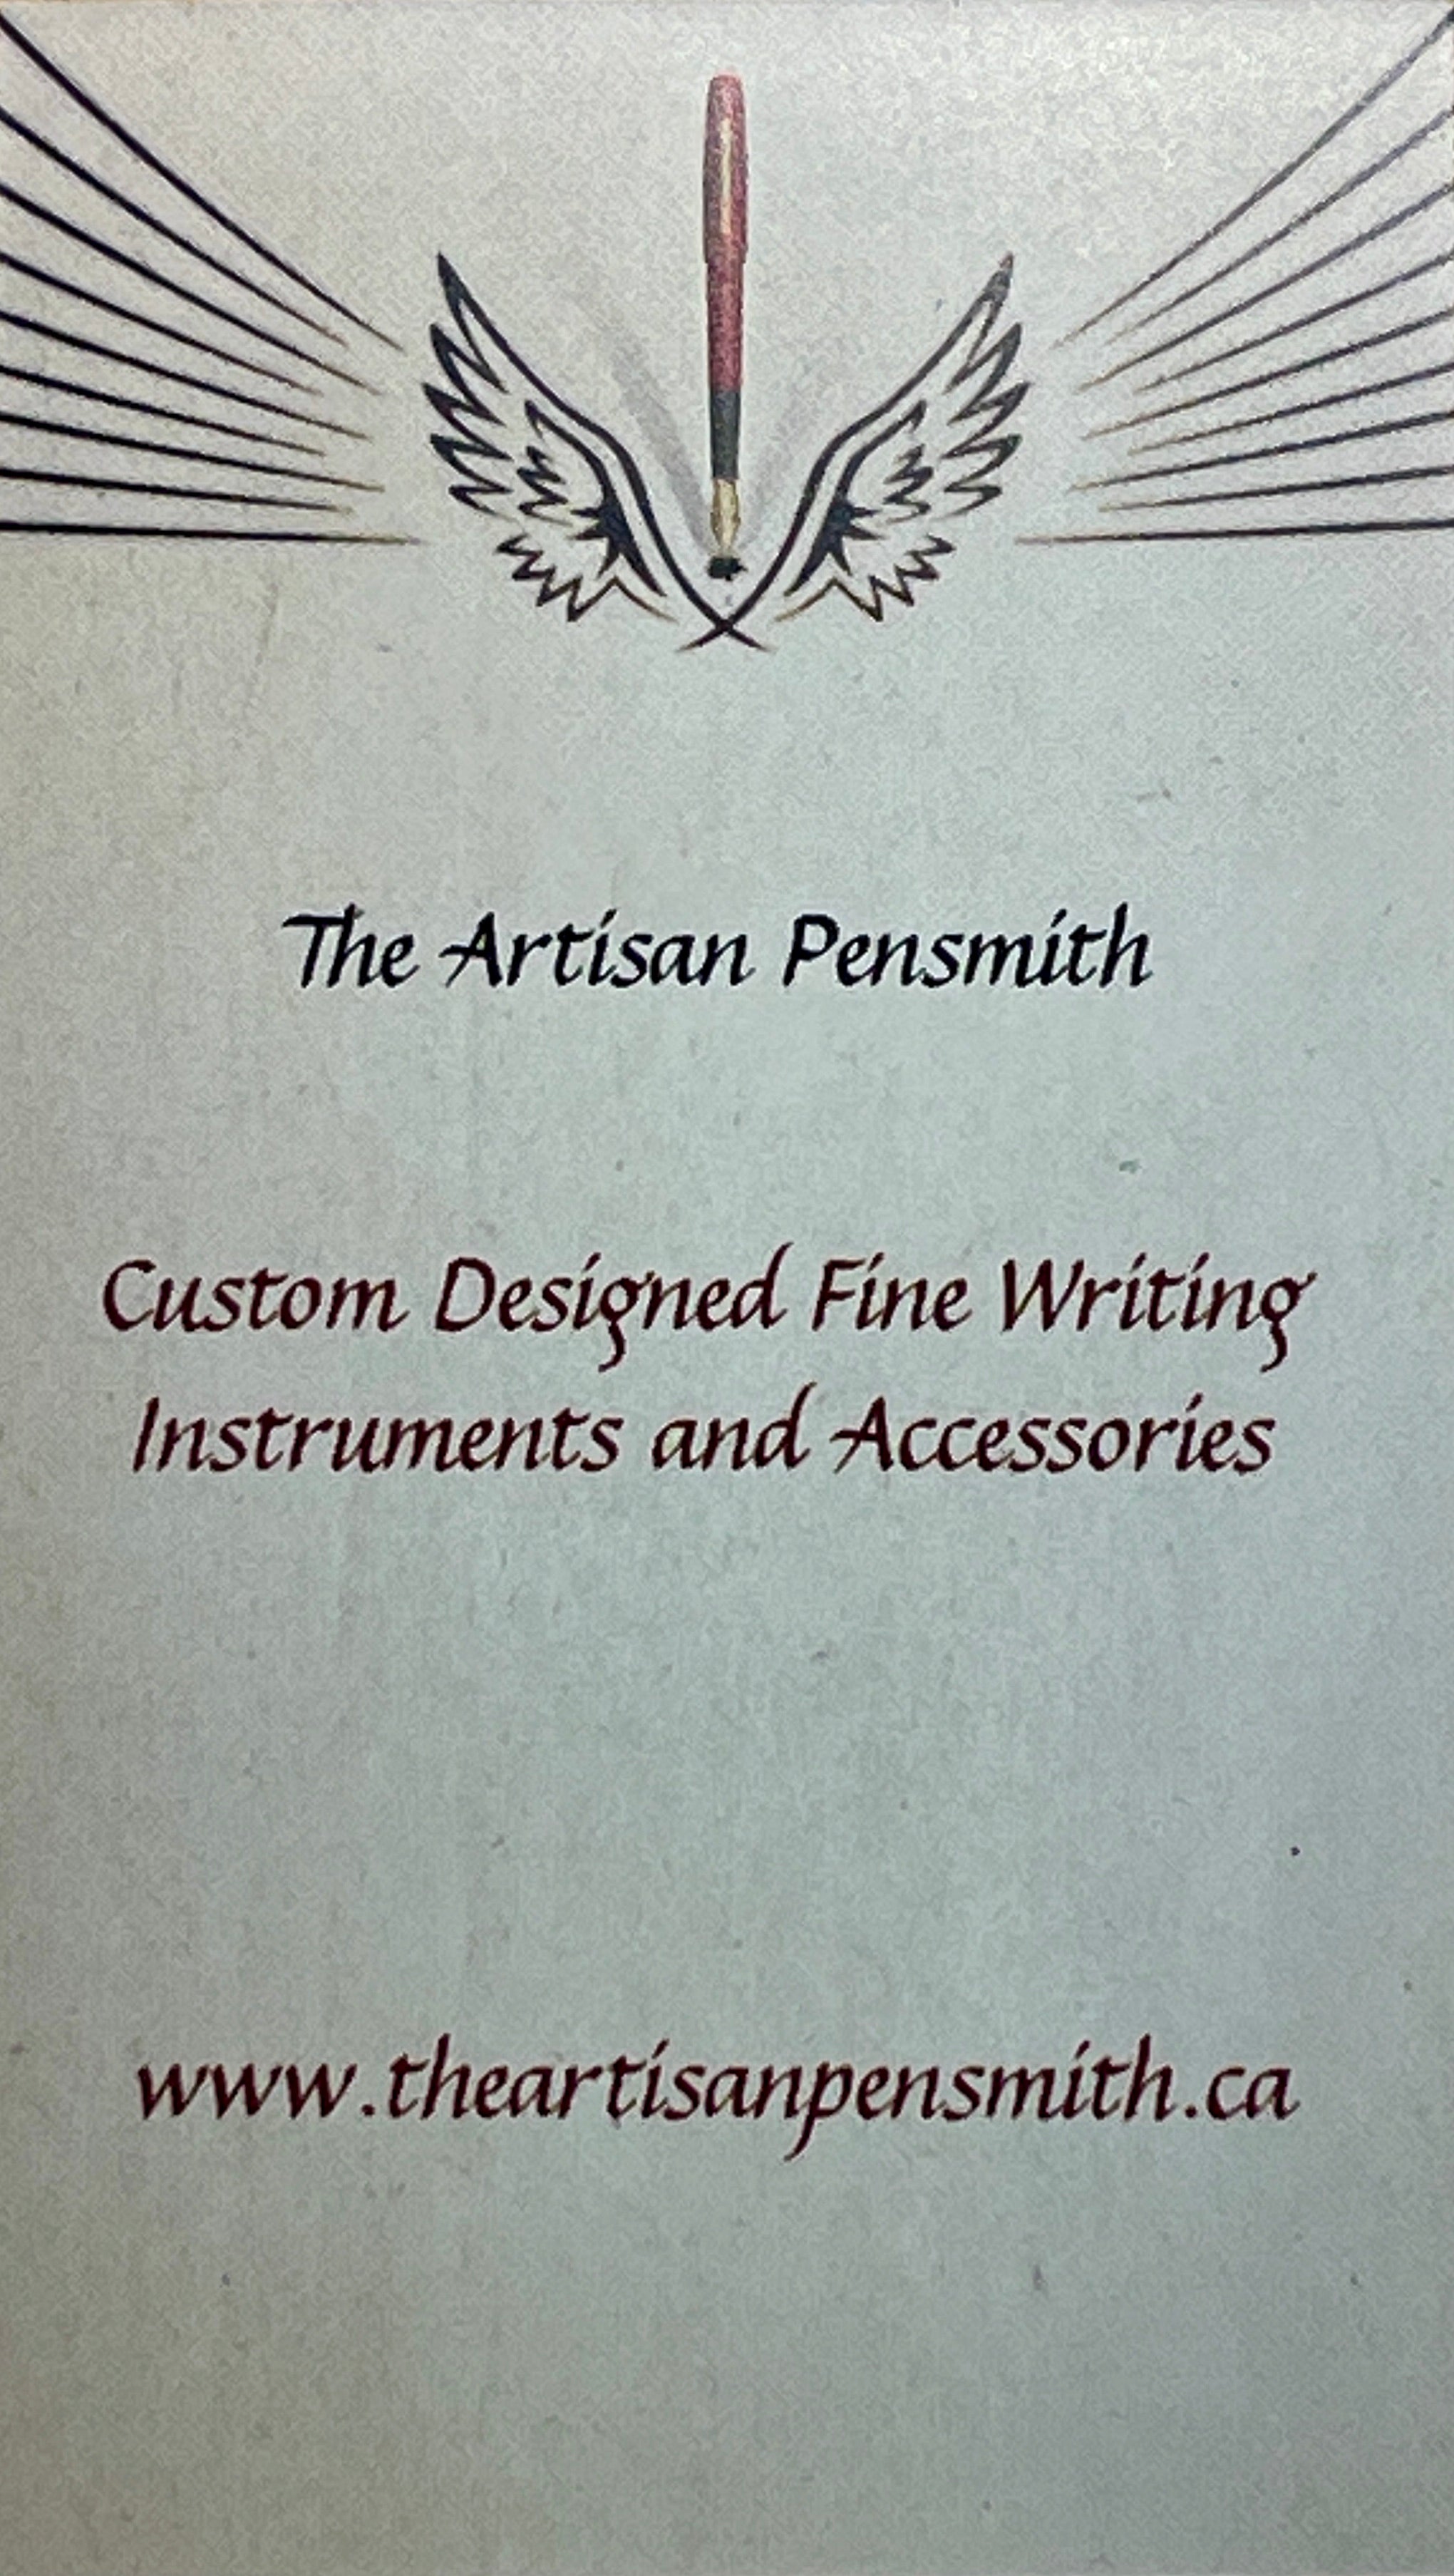 The Artisan Pensmith